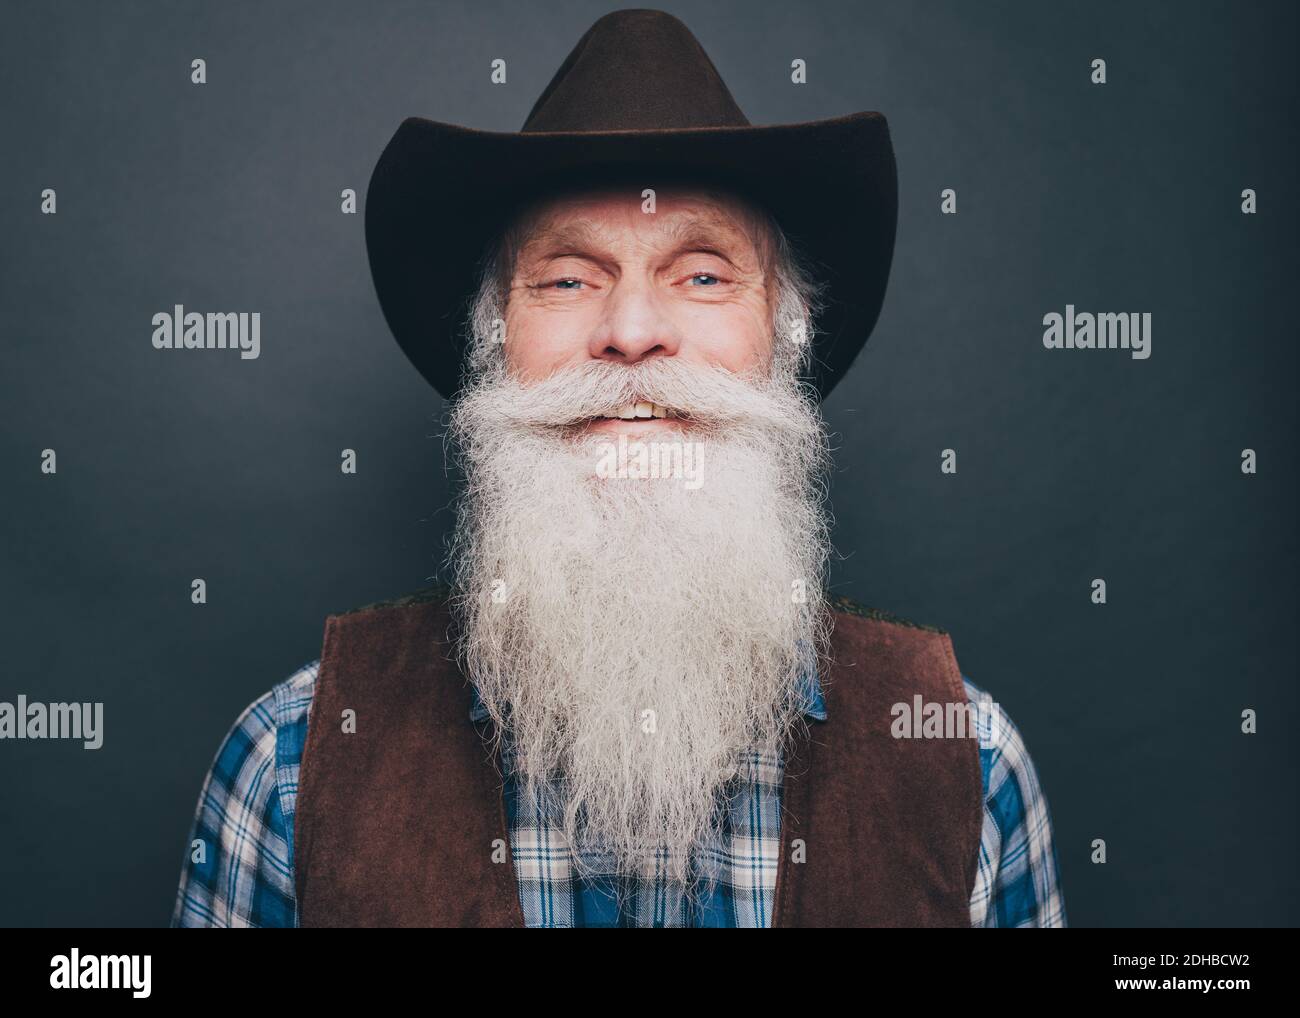 Portrait of happy bearded senior man wearing cowboy hat on gray background Stock Photo